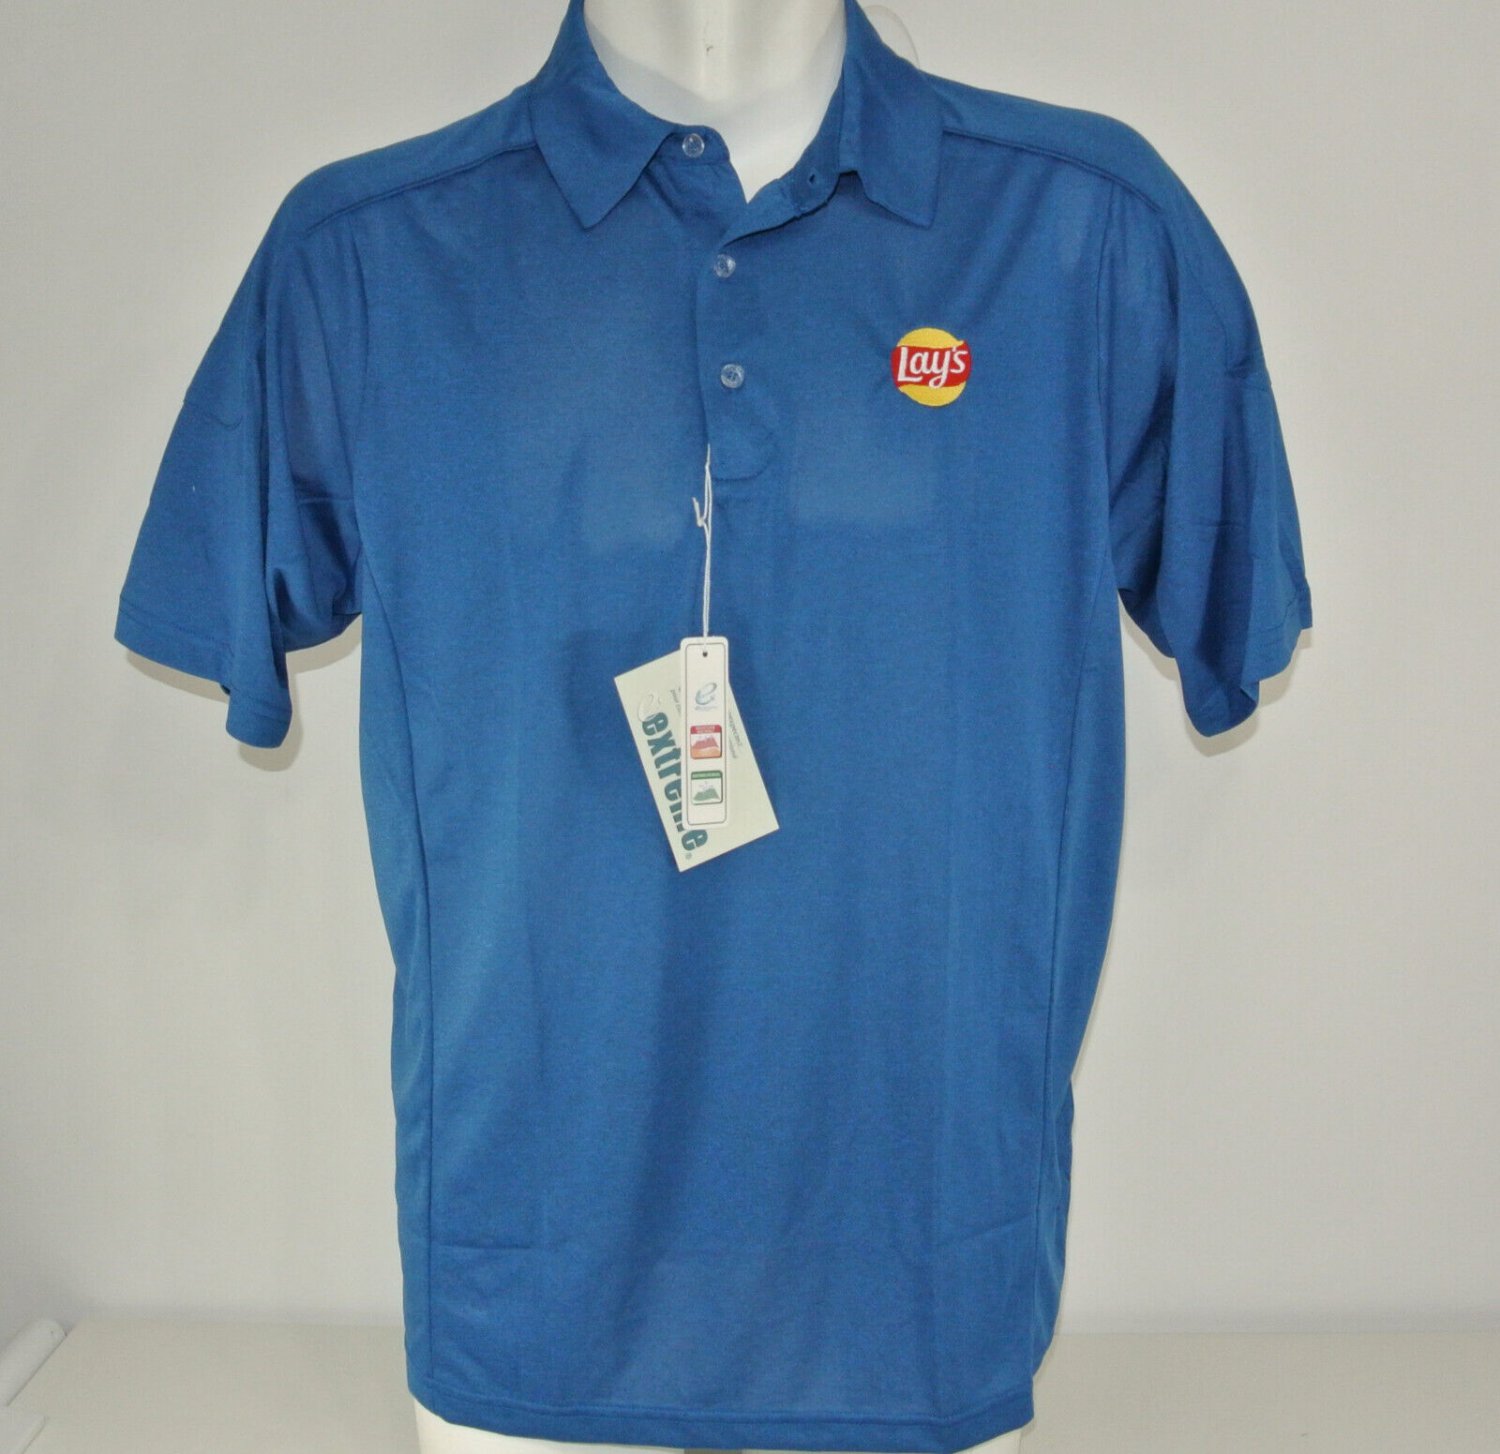 LAY'S Frito Lay Potato Chips Employee Uniform Polo Shirt Mens Size 2XL ...